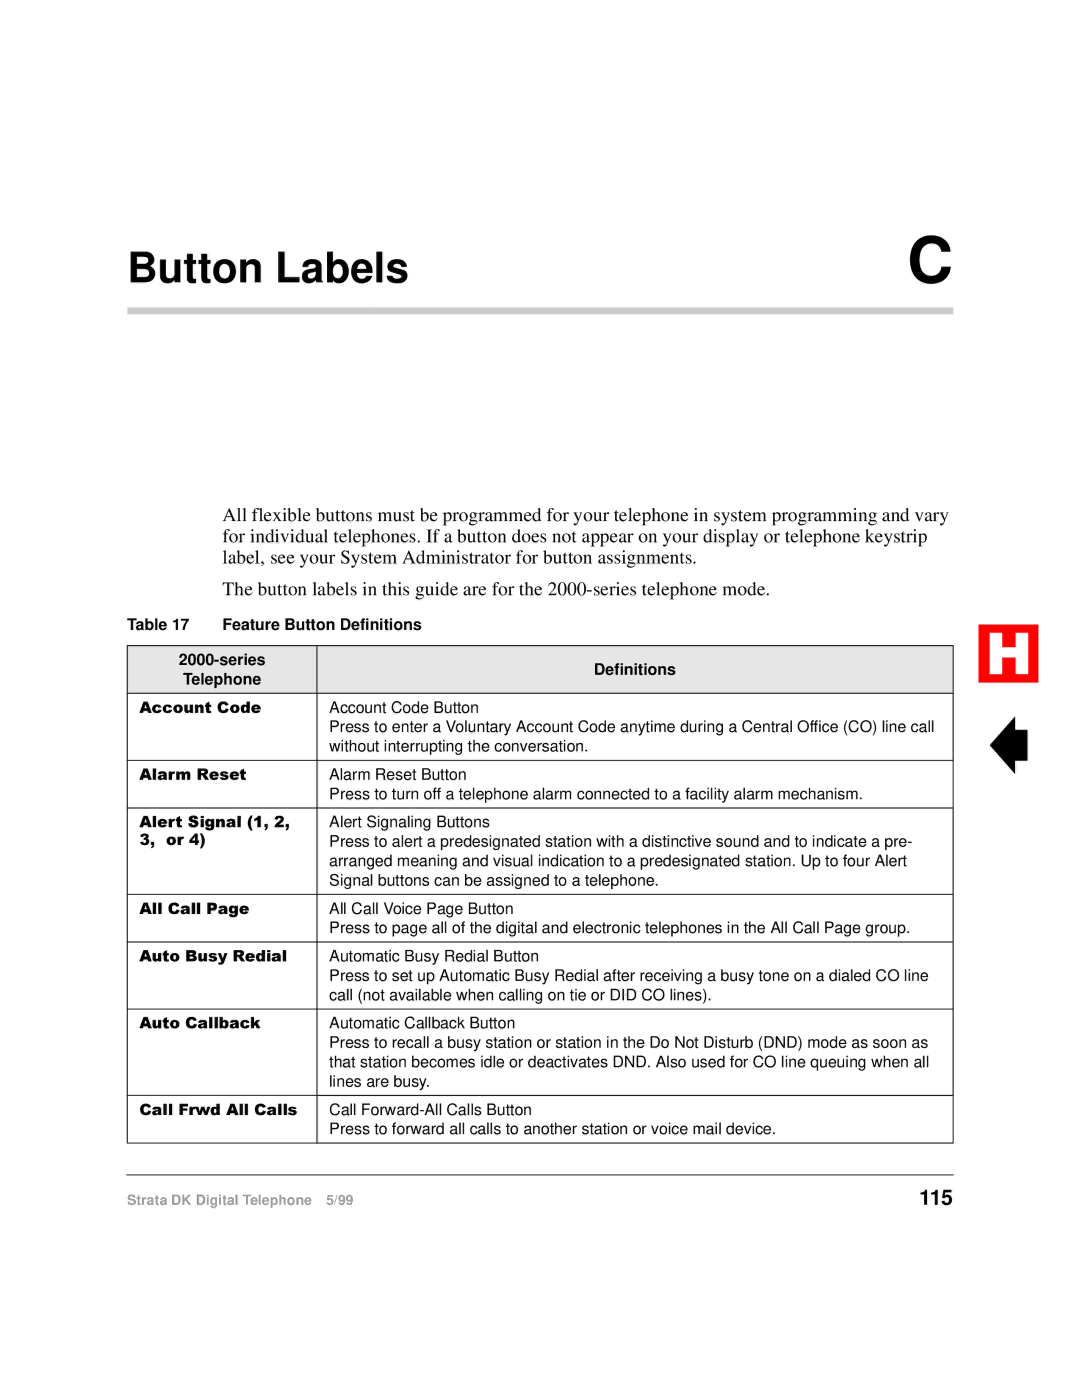 Toshiba Digital Telephone manual Button Labels, 115 